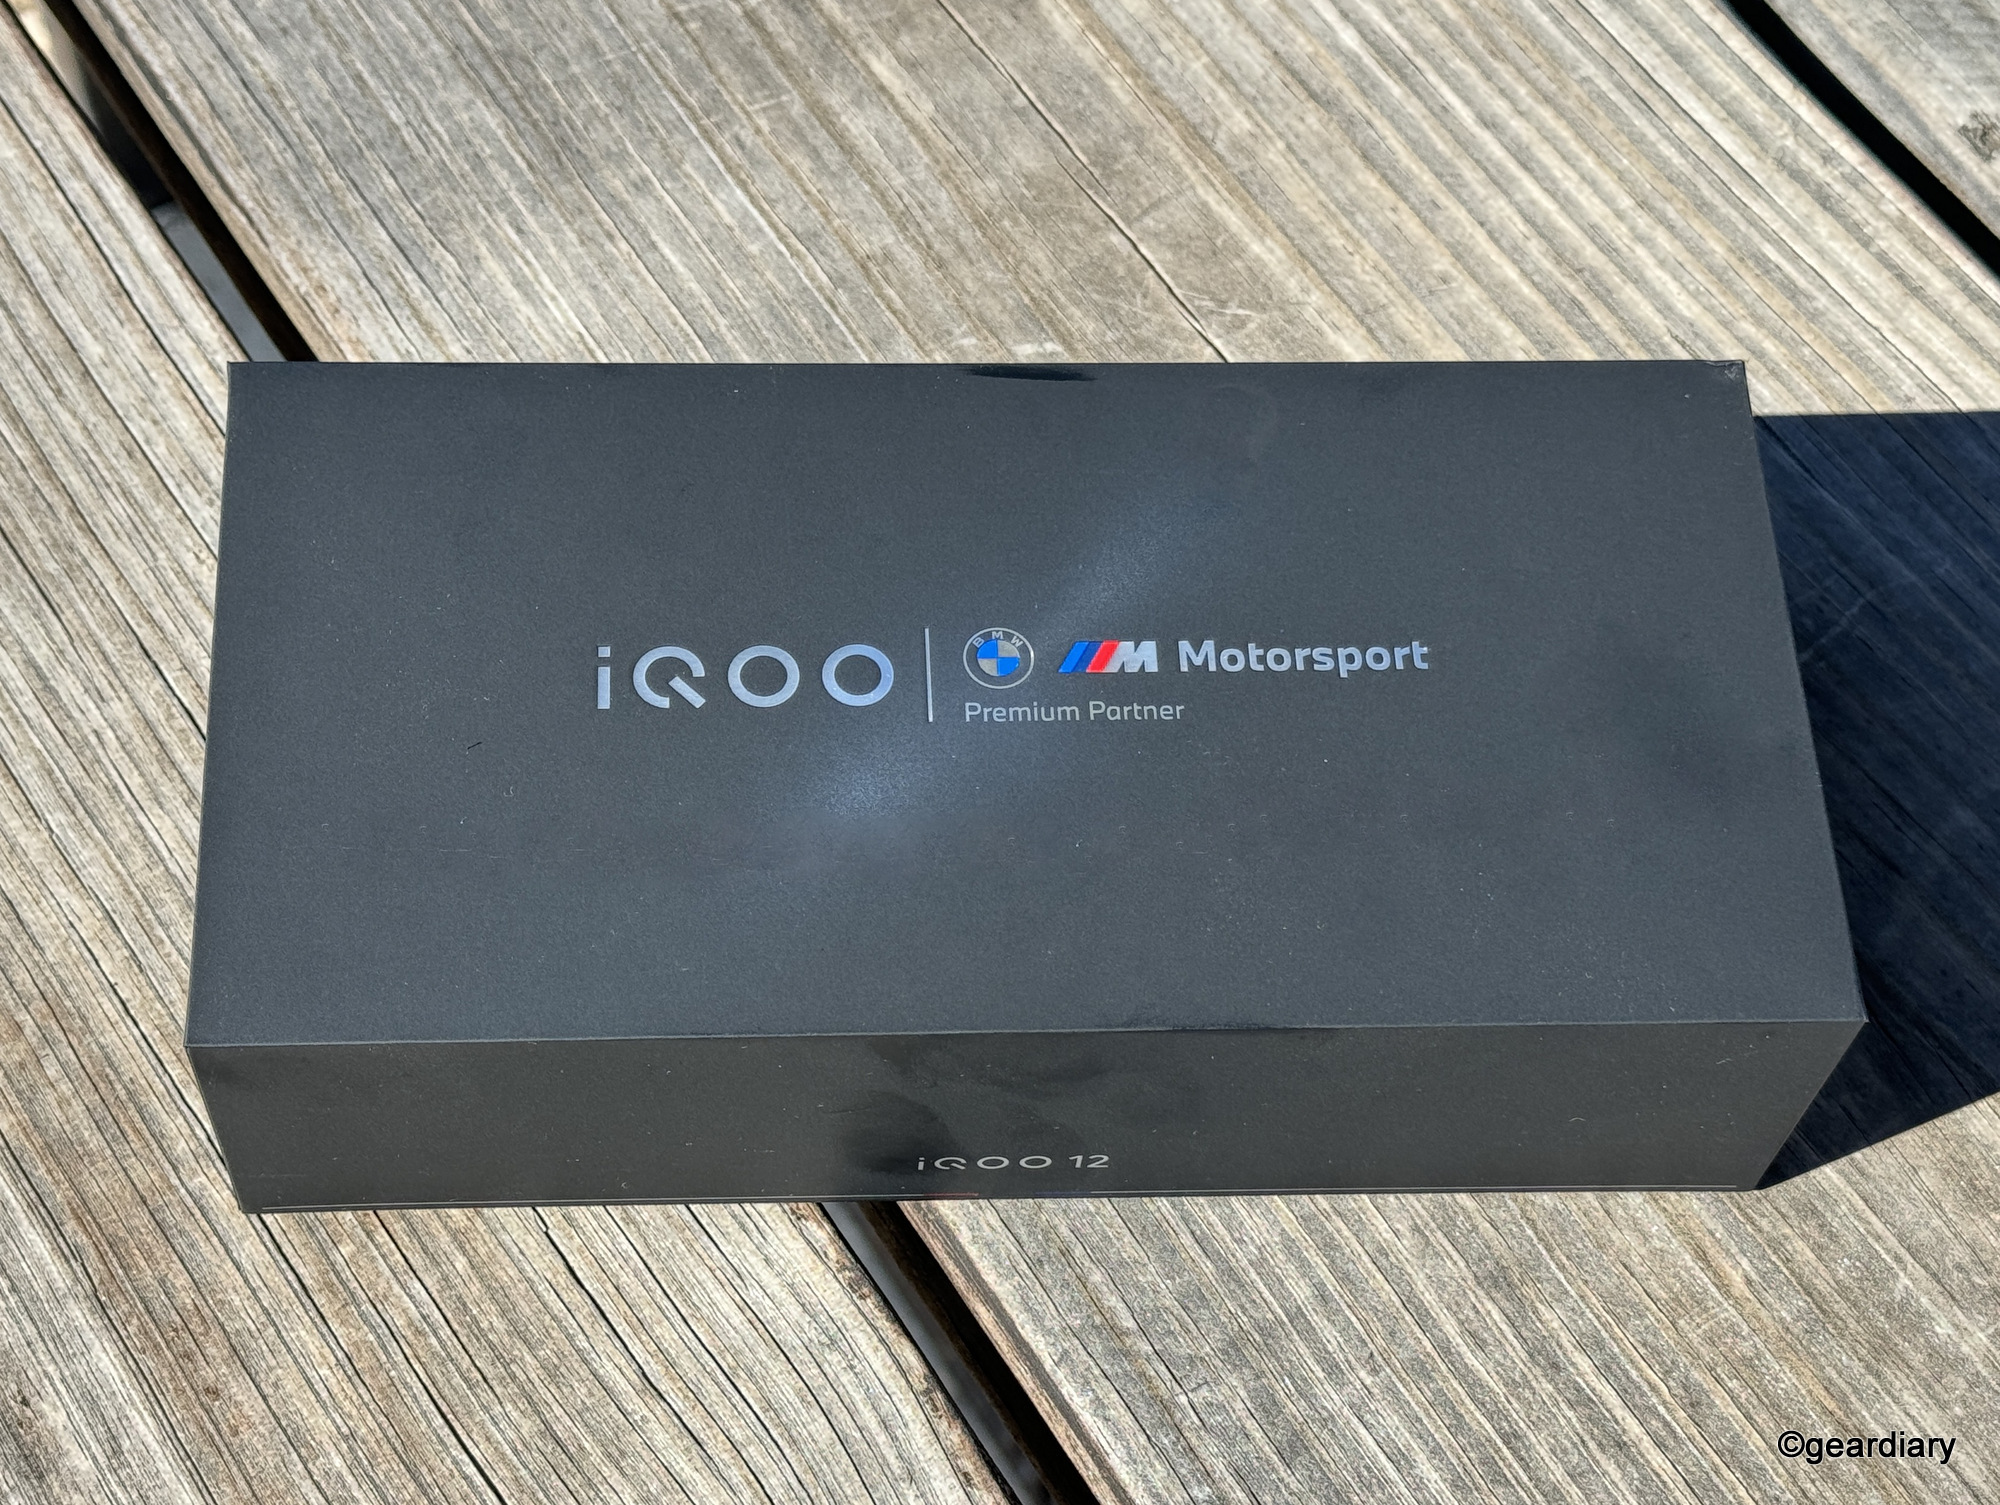 The IQOO 12 Legend Edition retail box